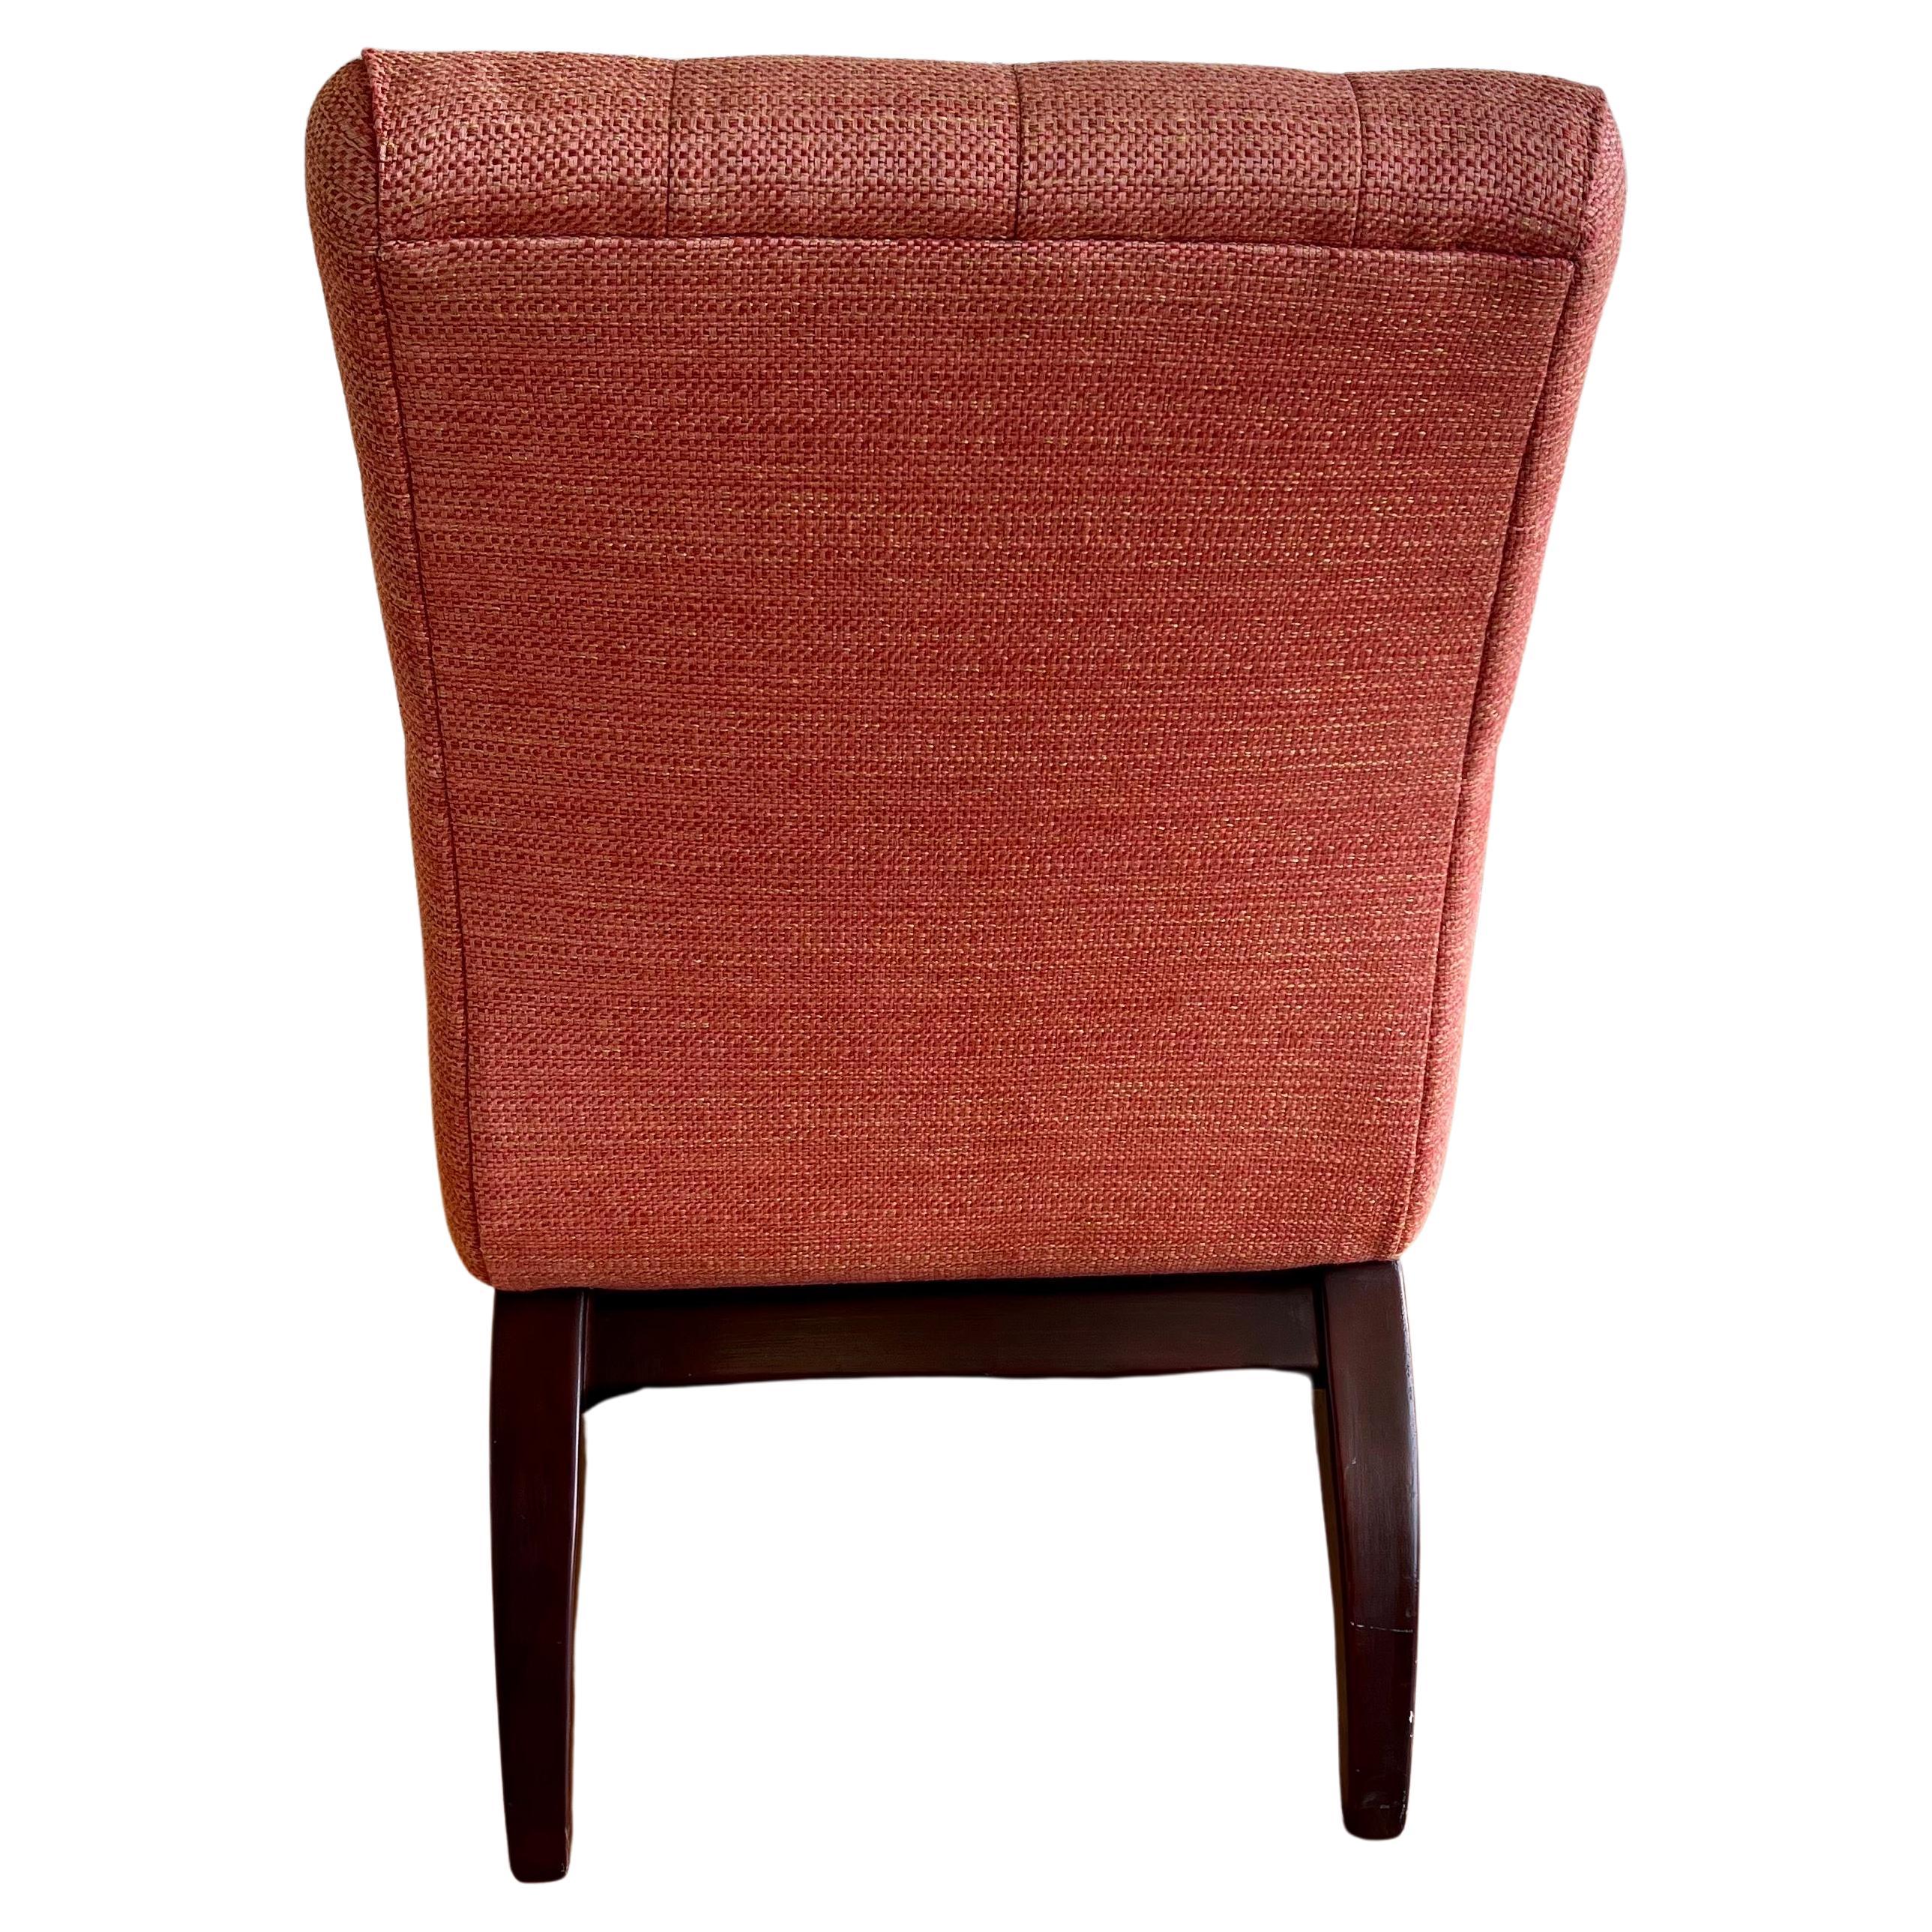 American Beautiful Elegant Single Upholstered Slipper Chair by Robert Allen